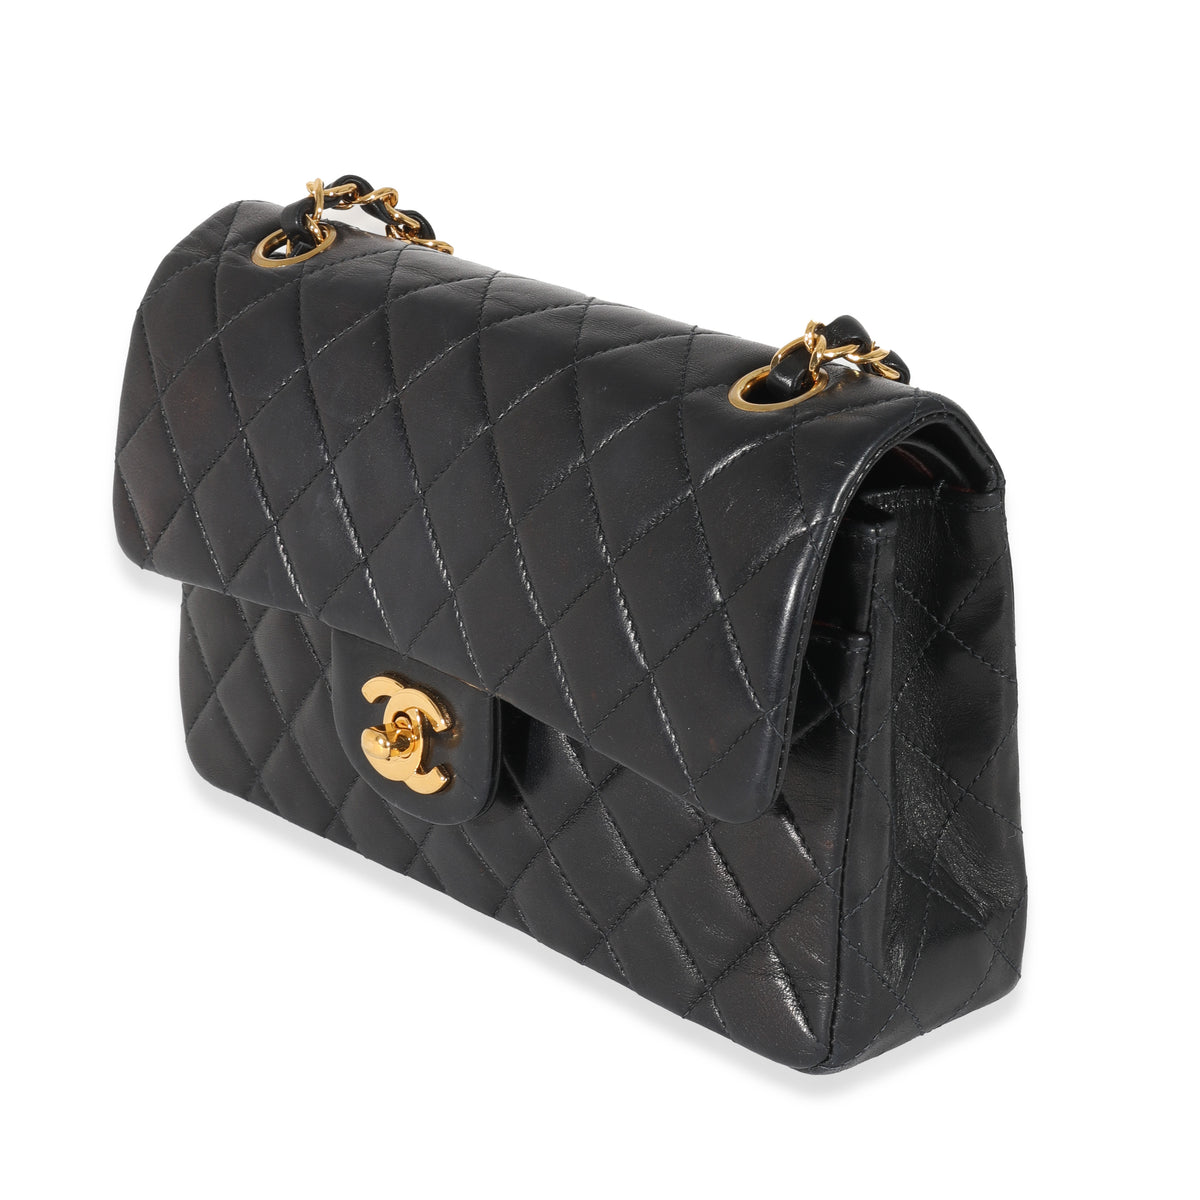 Chanel Vintage Black Lambskin Small Classic Flap Bag